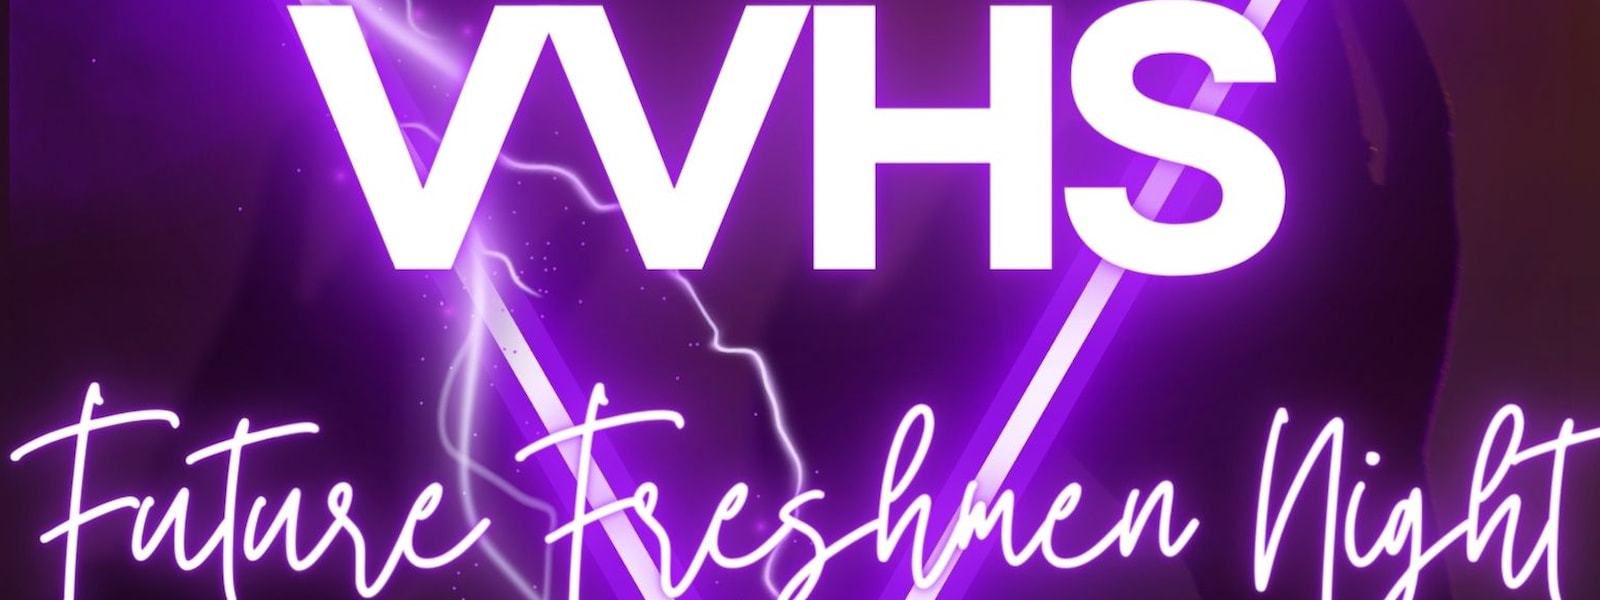 words VVHS Future Freshman Night with lightning